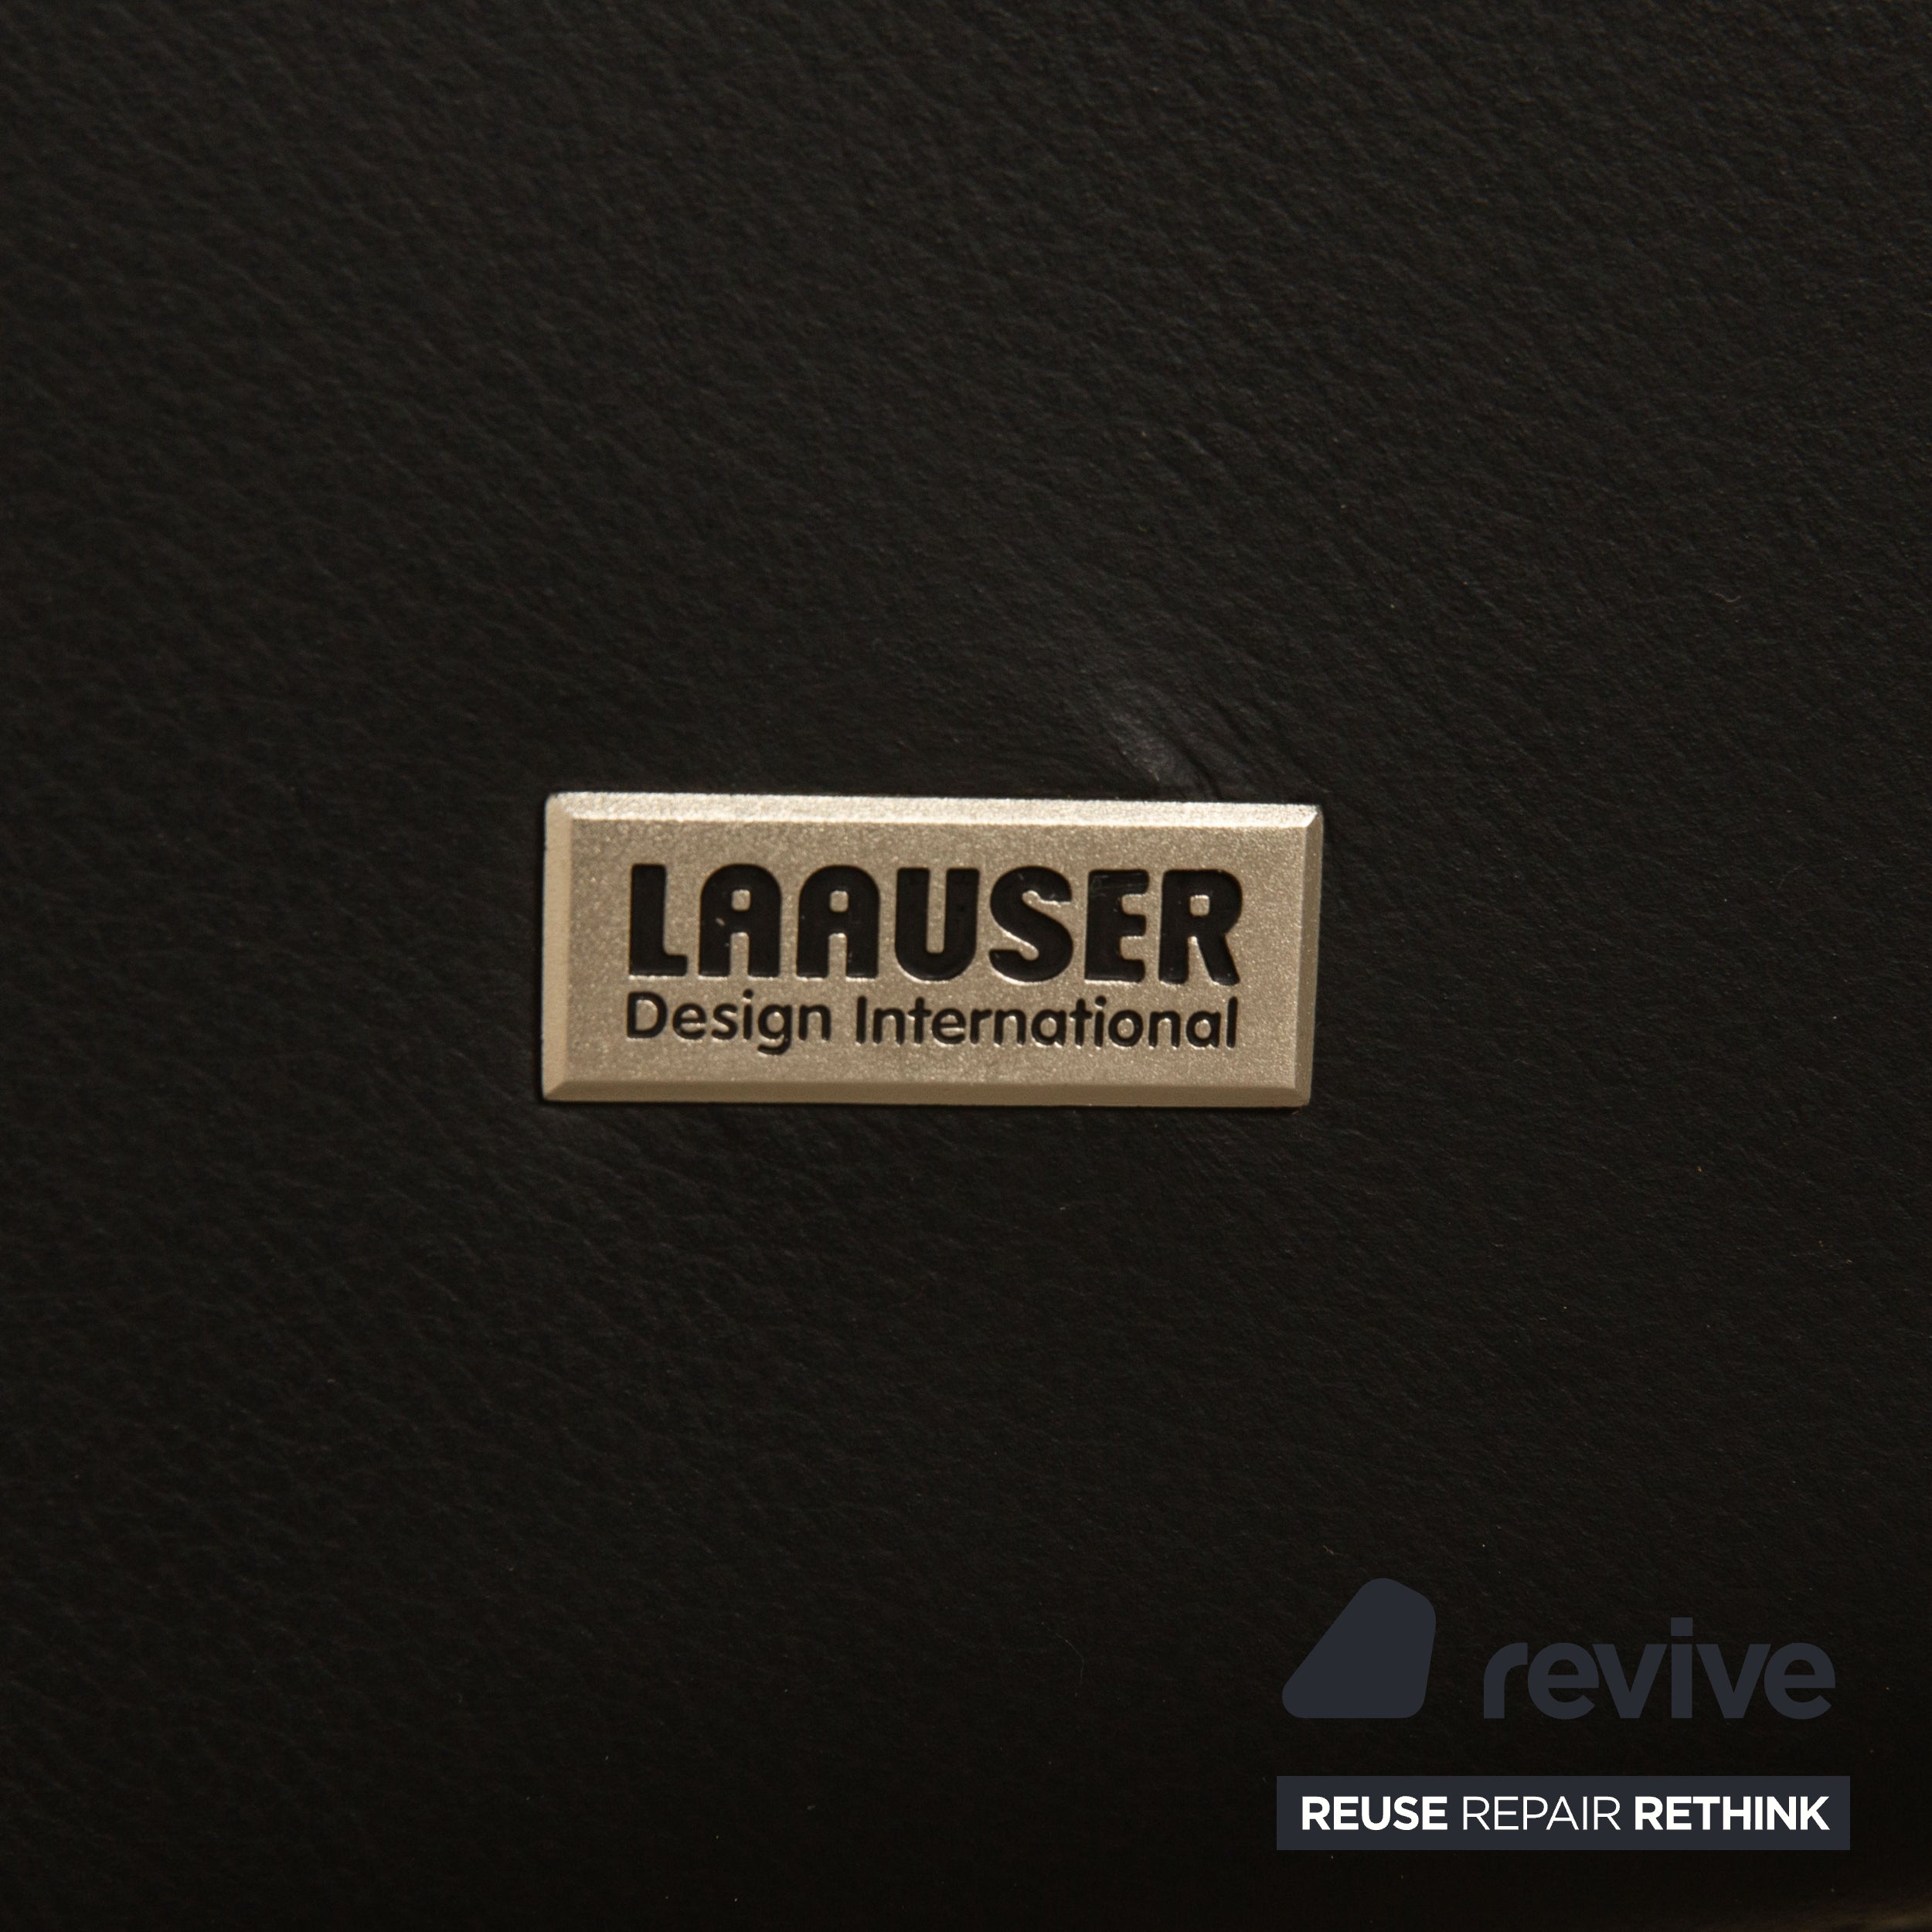 Laauser Atlanta Leather Armchair Black